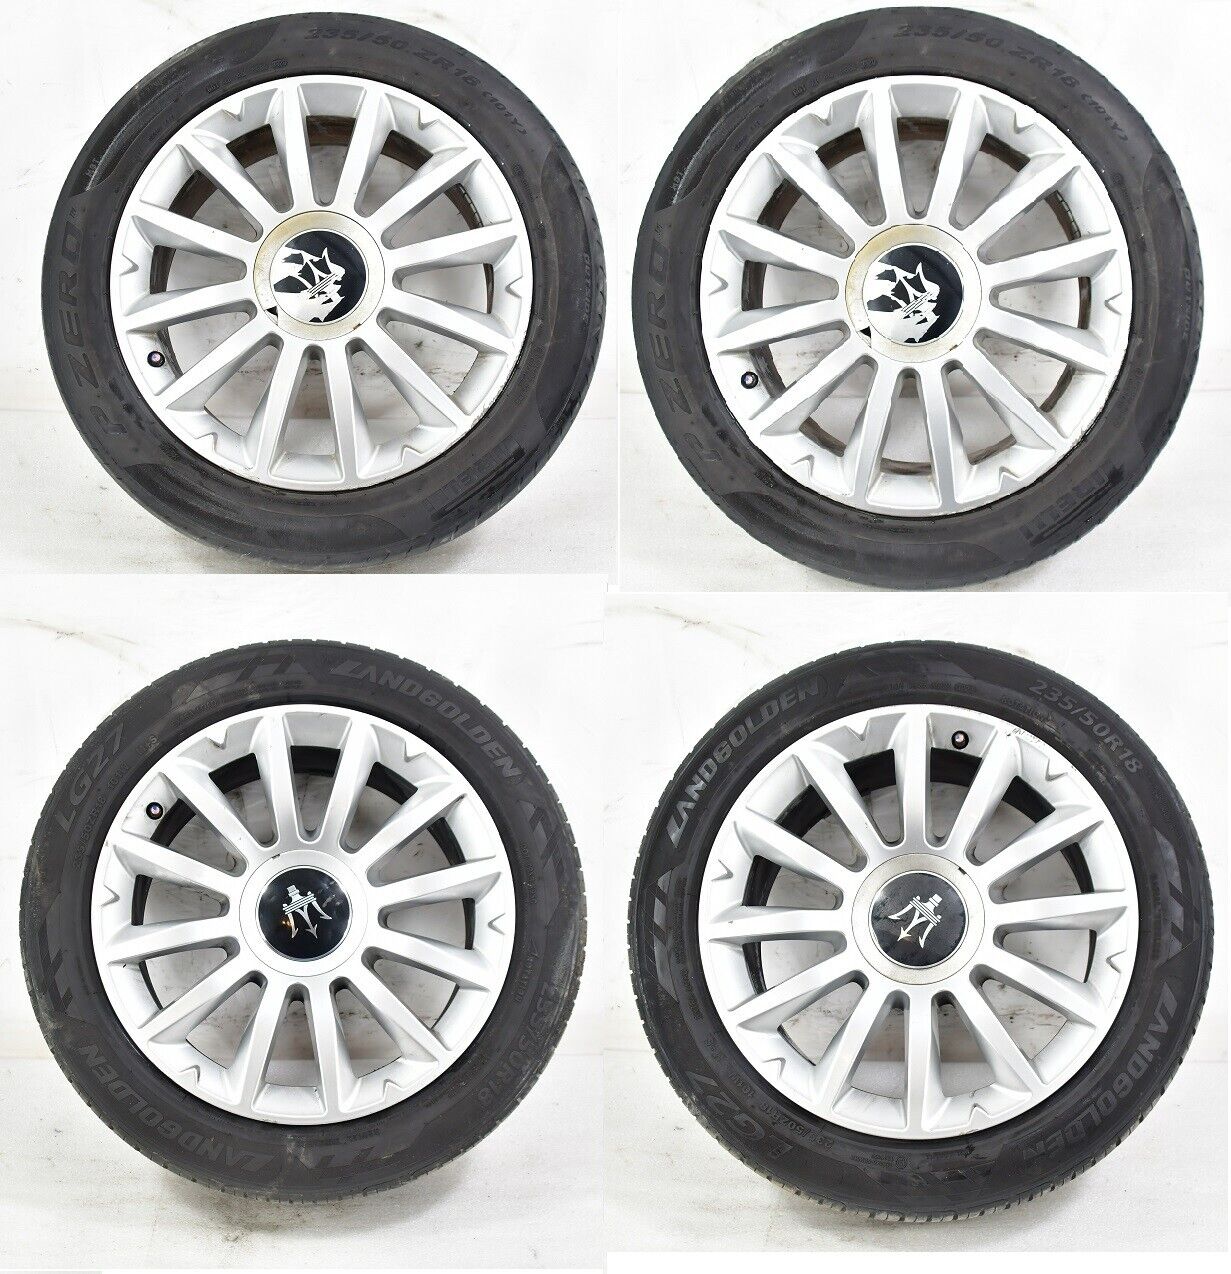 💎 2013-2015 MASERATI Ghibli Alfieri OEM Factory FRONT Wheels Rims & Tires 18